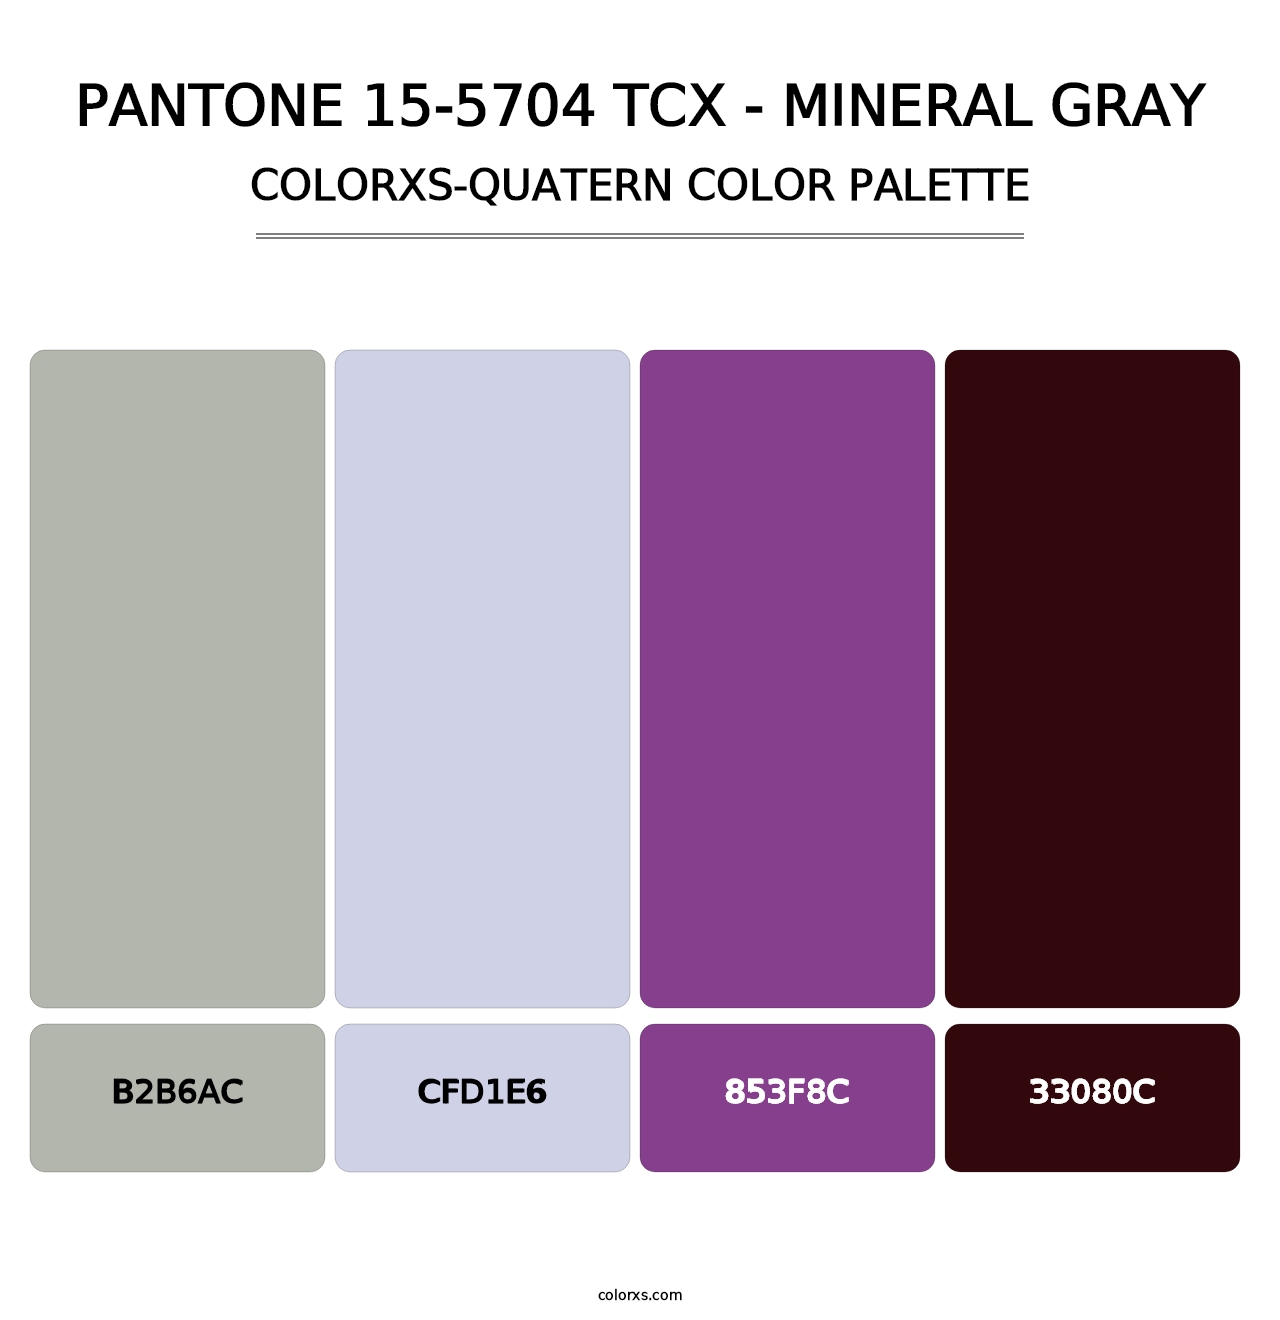 PANTONE 15-5704 TCX - Mineral Gray - Colorxs Quatern Palette